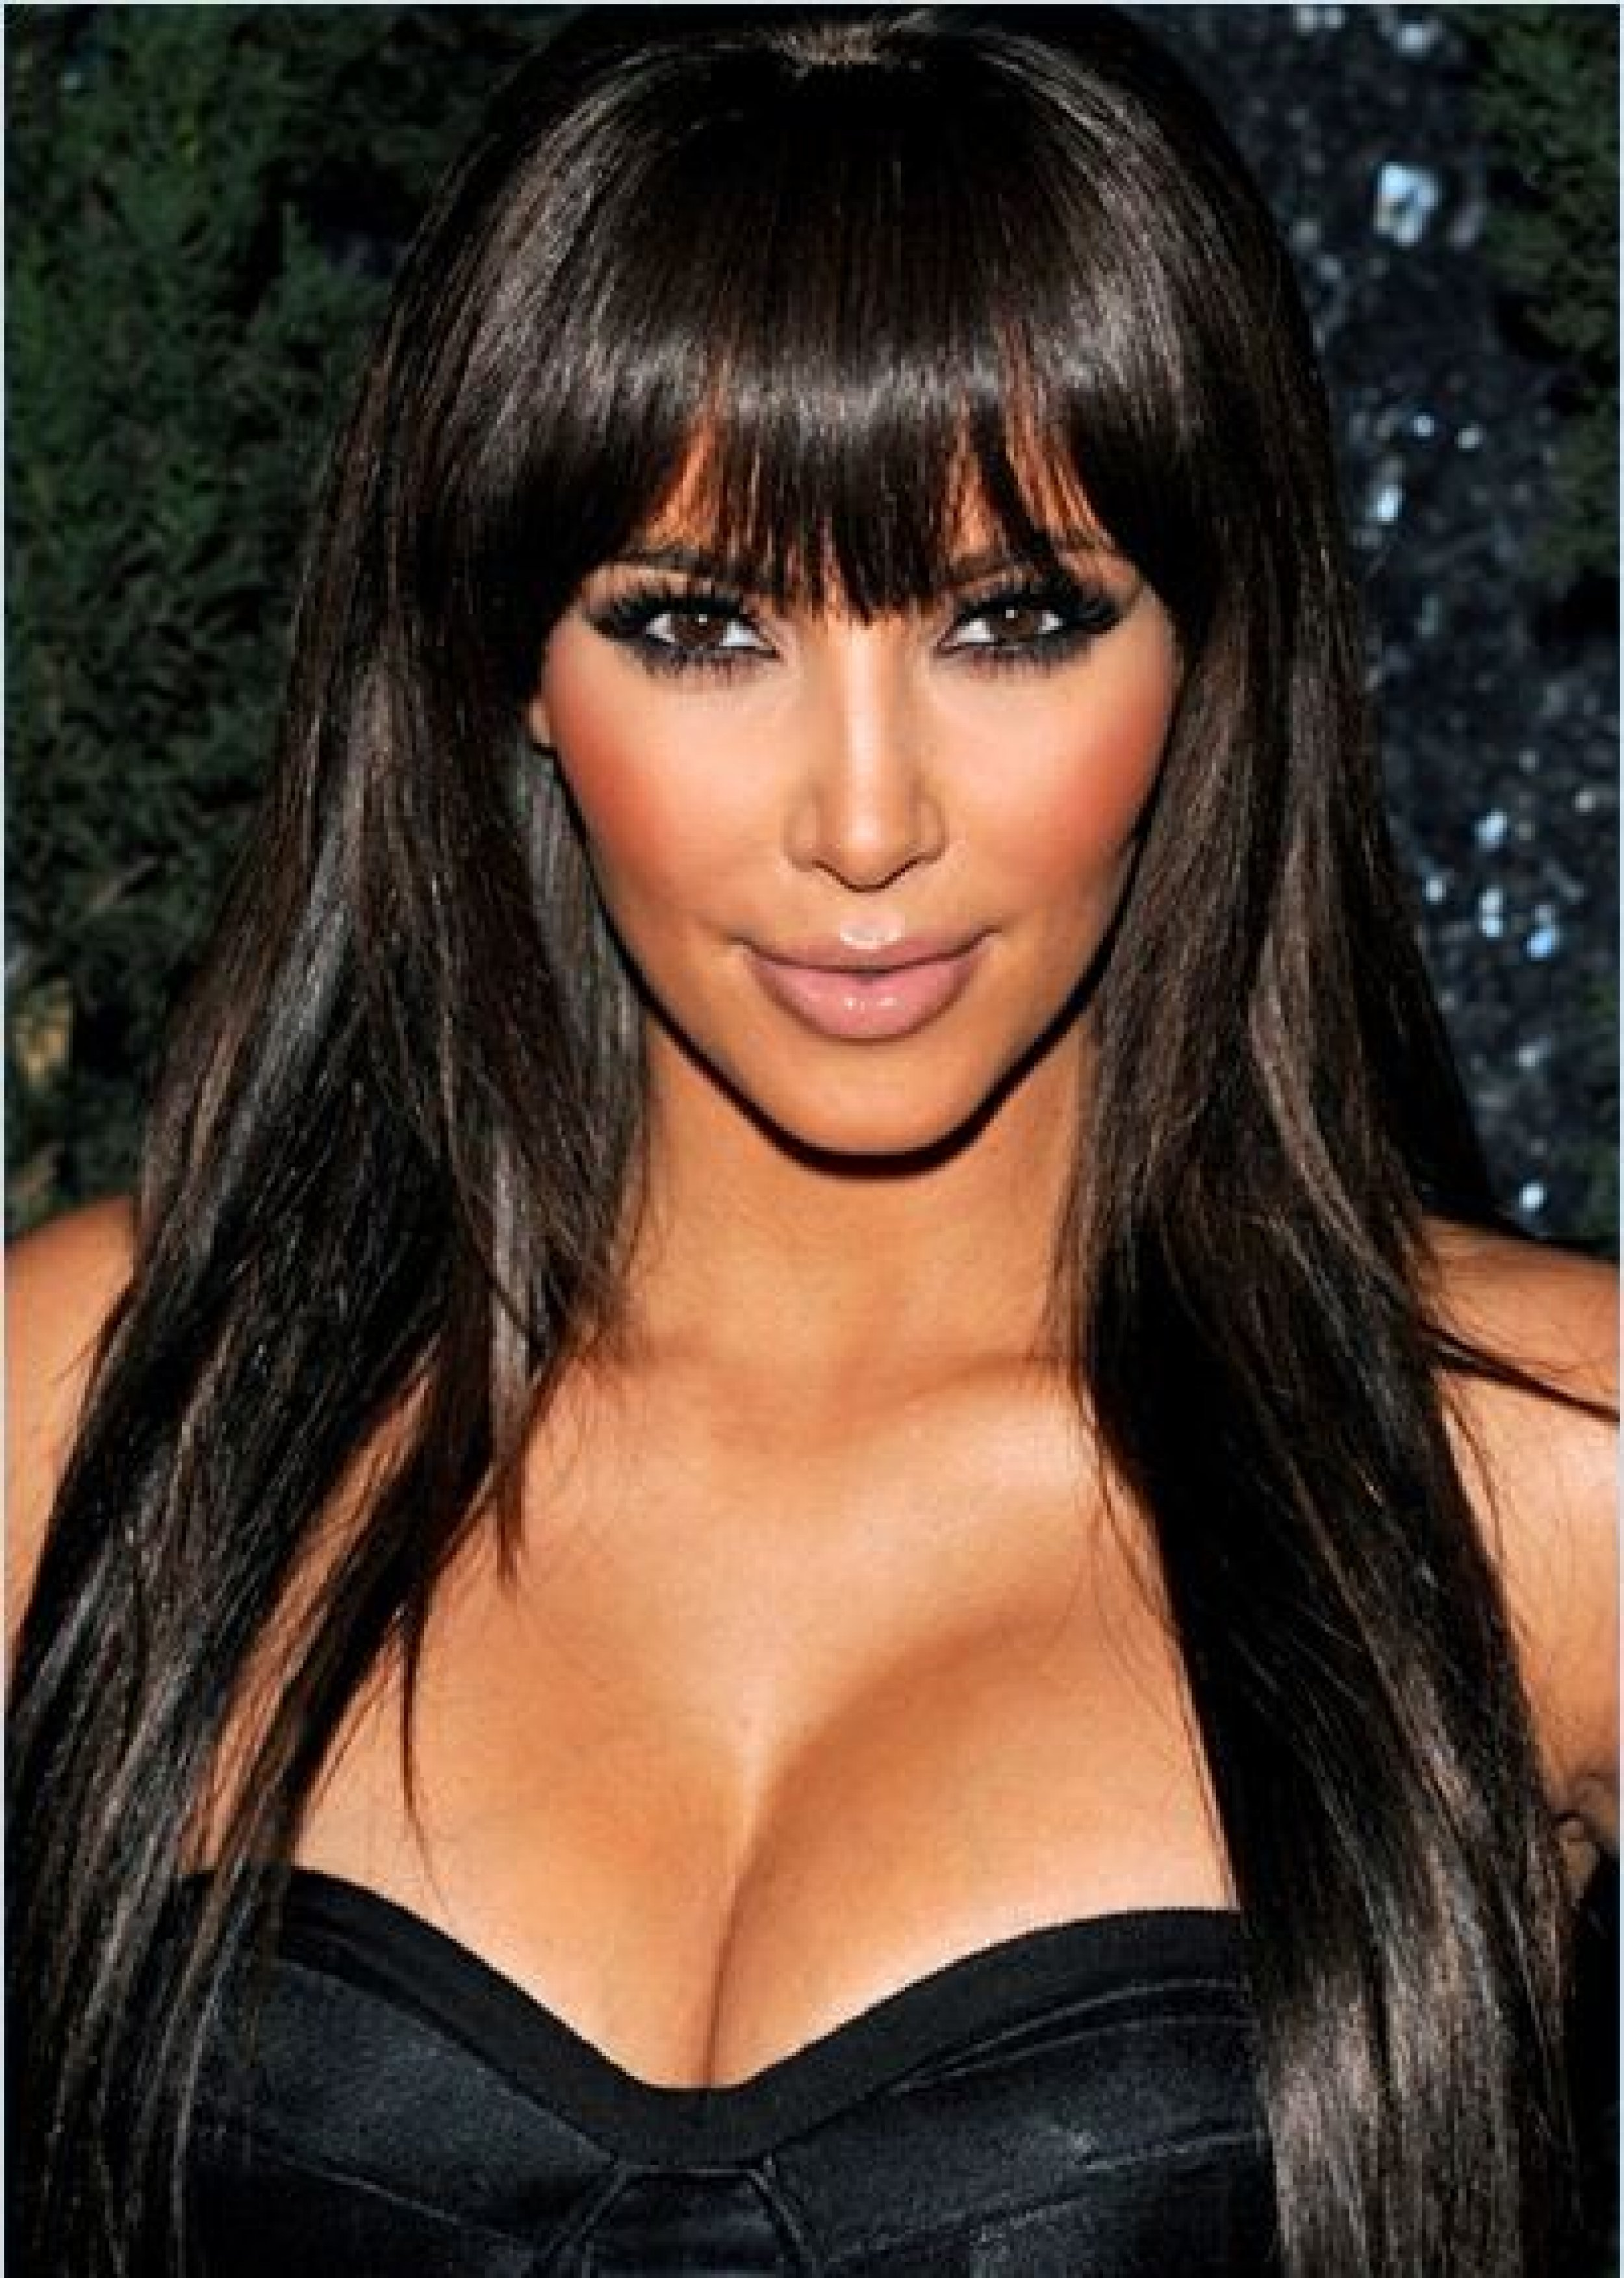 Kim Kardashian GAP Lawsuit